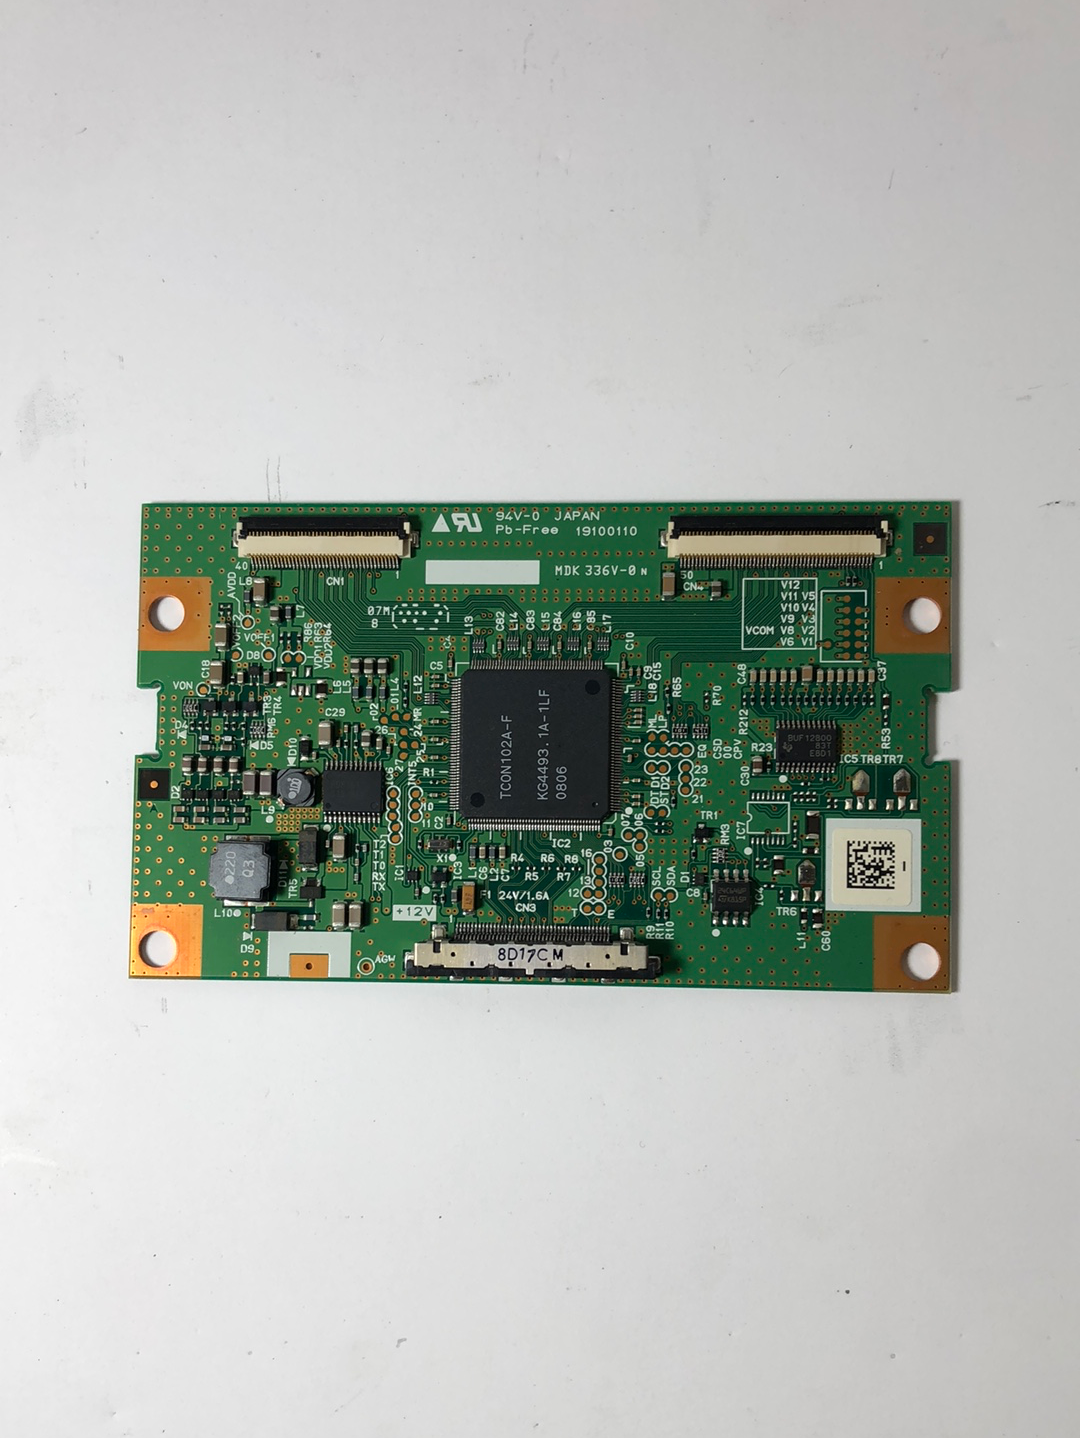 Toshiba/Element IPS Alpha 19100110 (MDK336V-0) T-Con Board